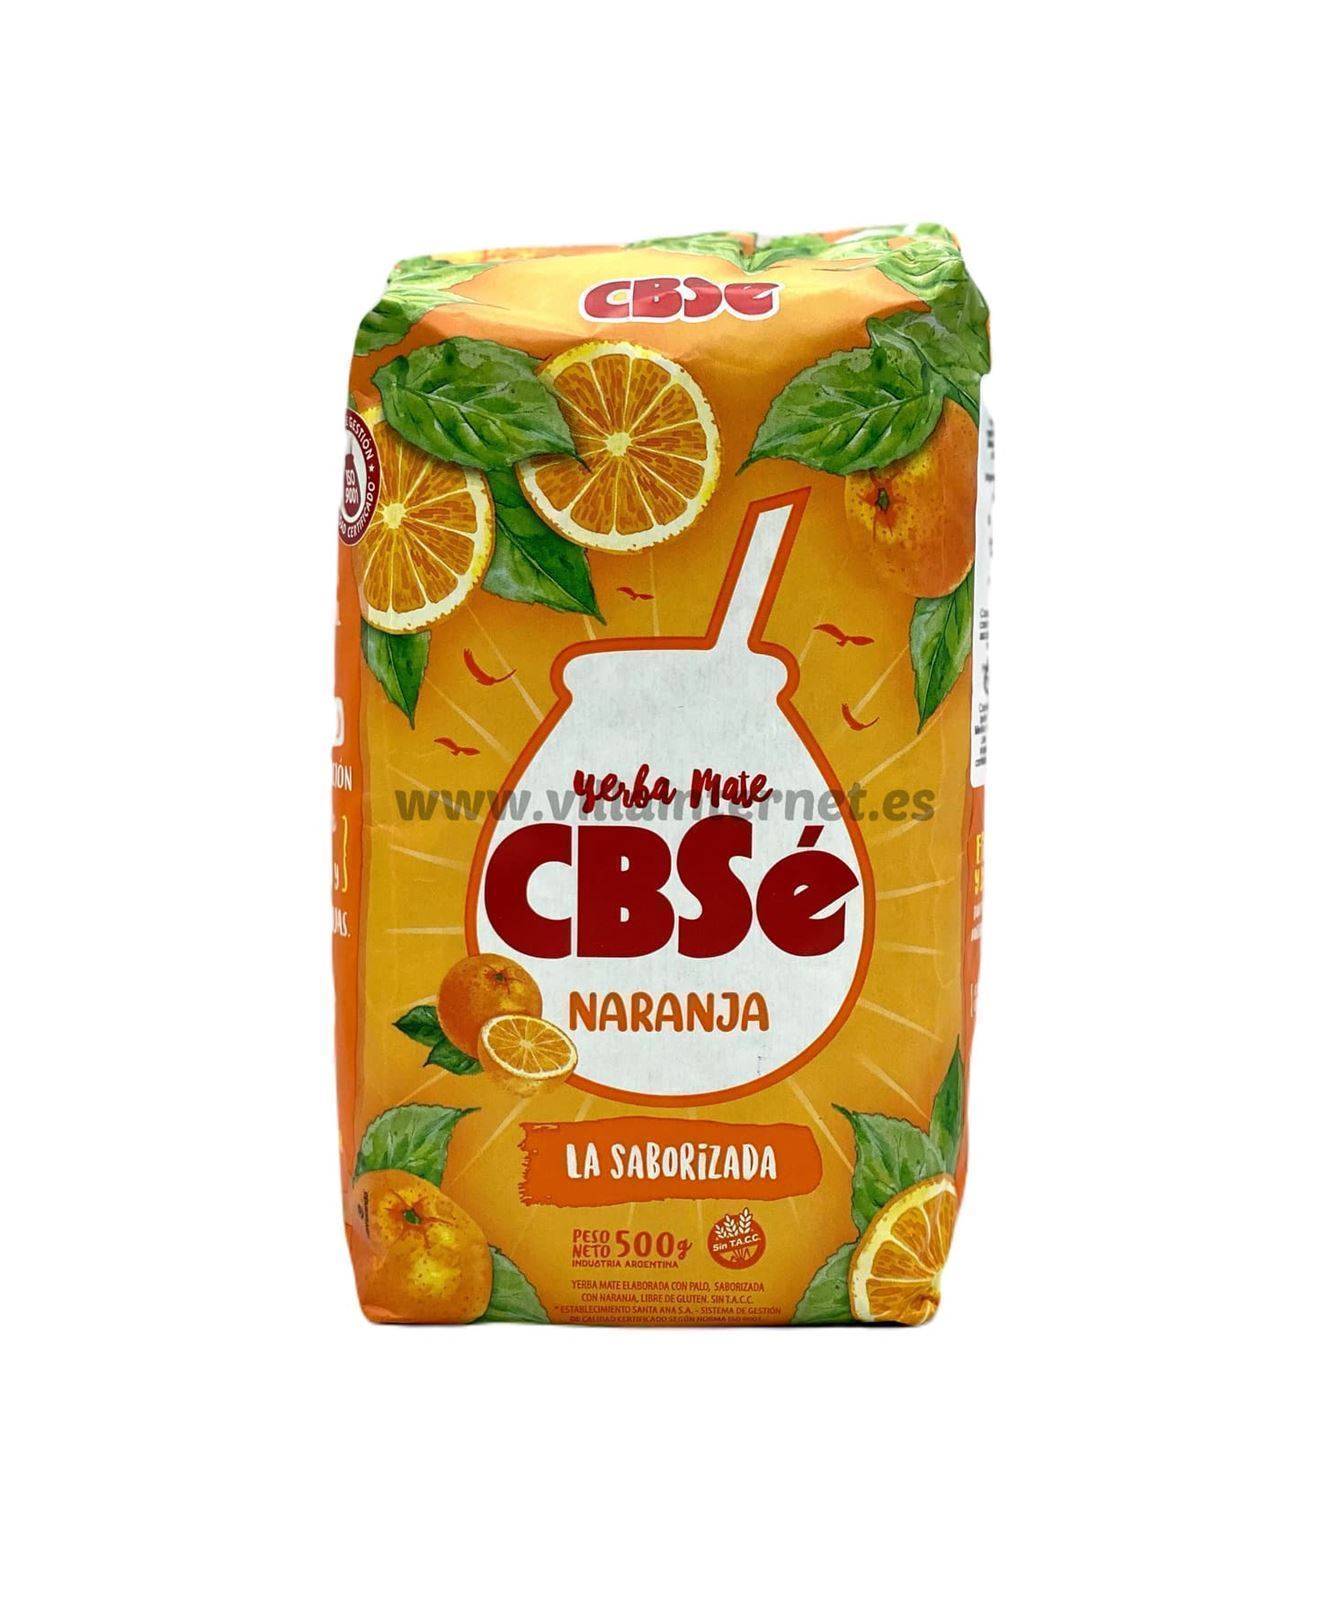 Yerba mate CBSé naranja 500g - Imagen 1